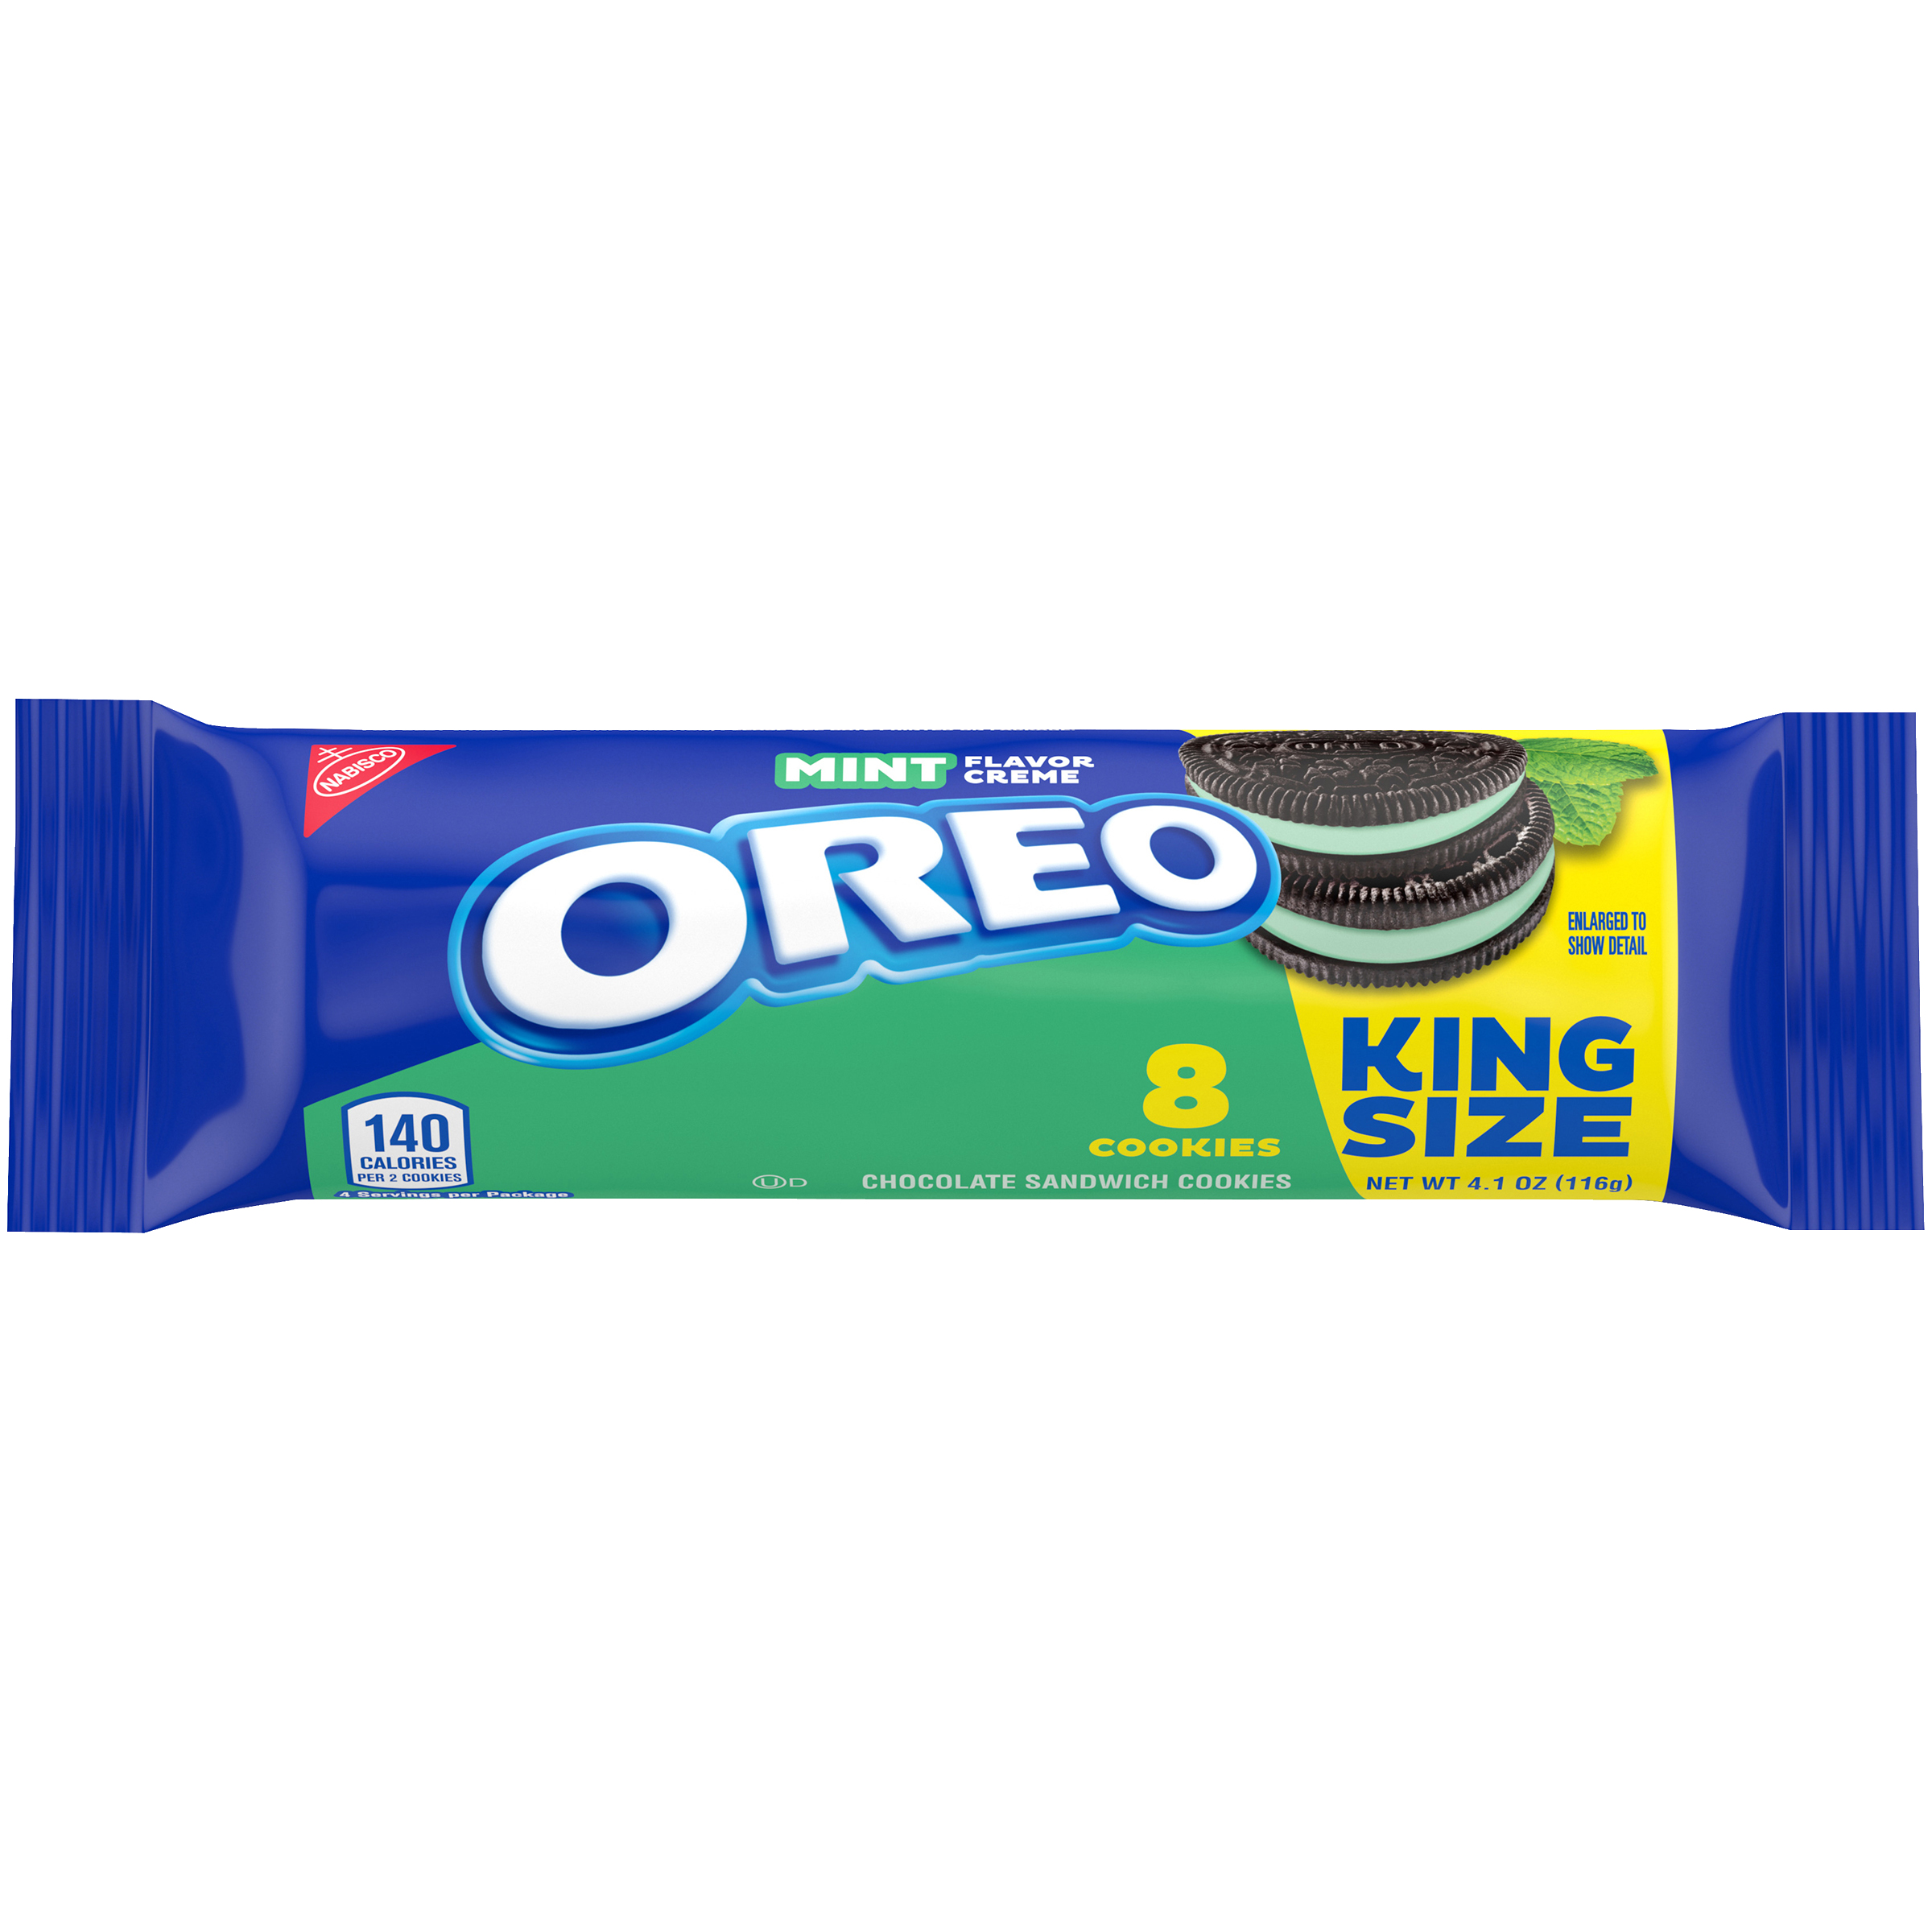 OREO Mint Creme King Size 8CT 2/4.1OZ